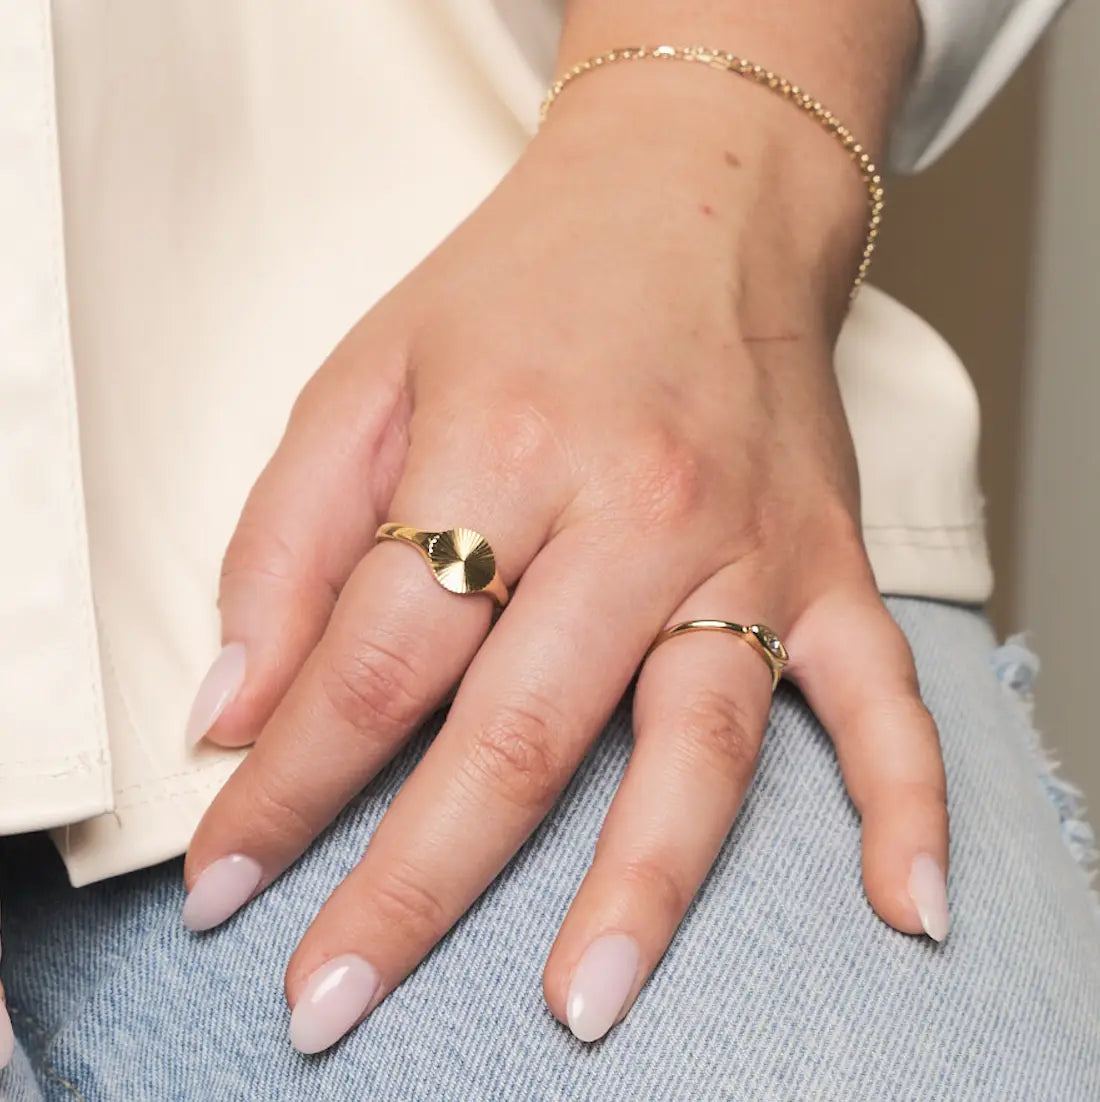 Quinn Signet Ring